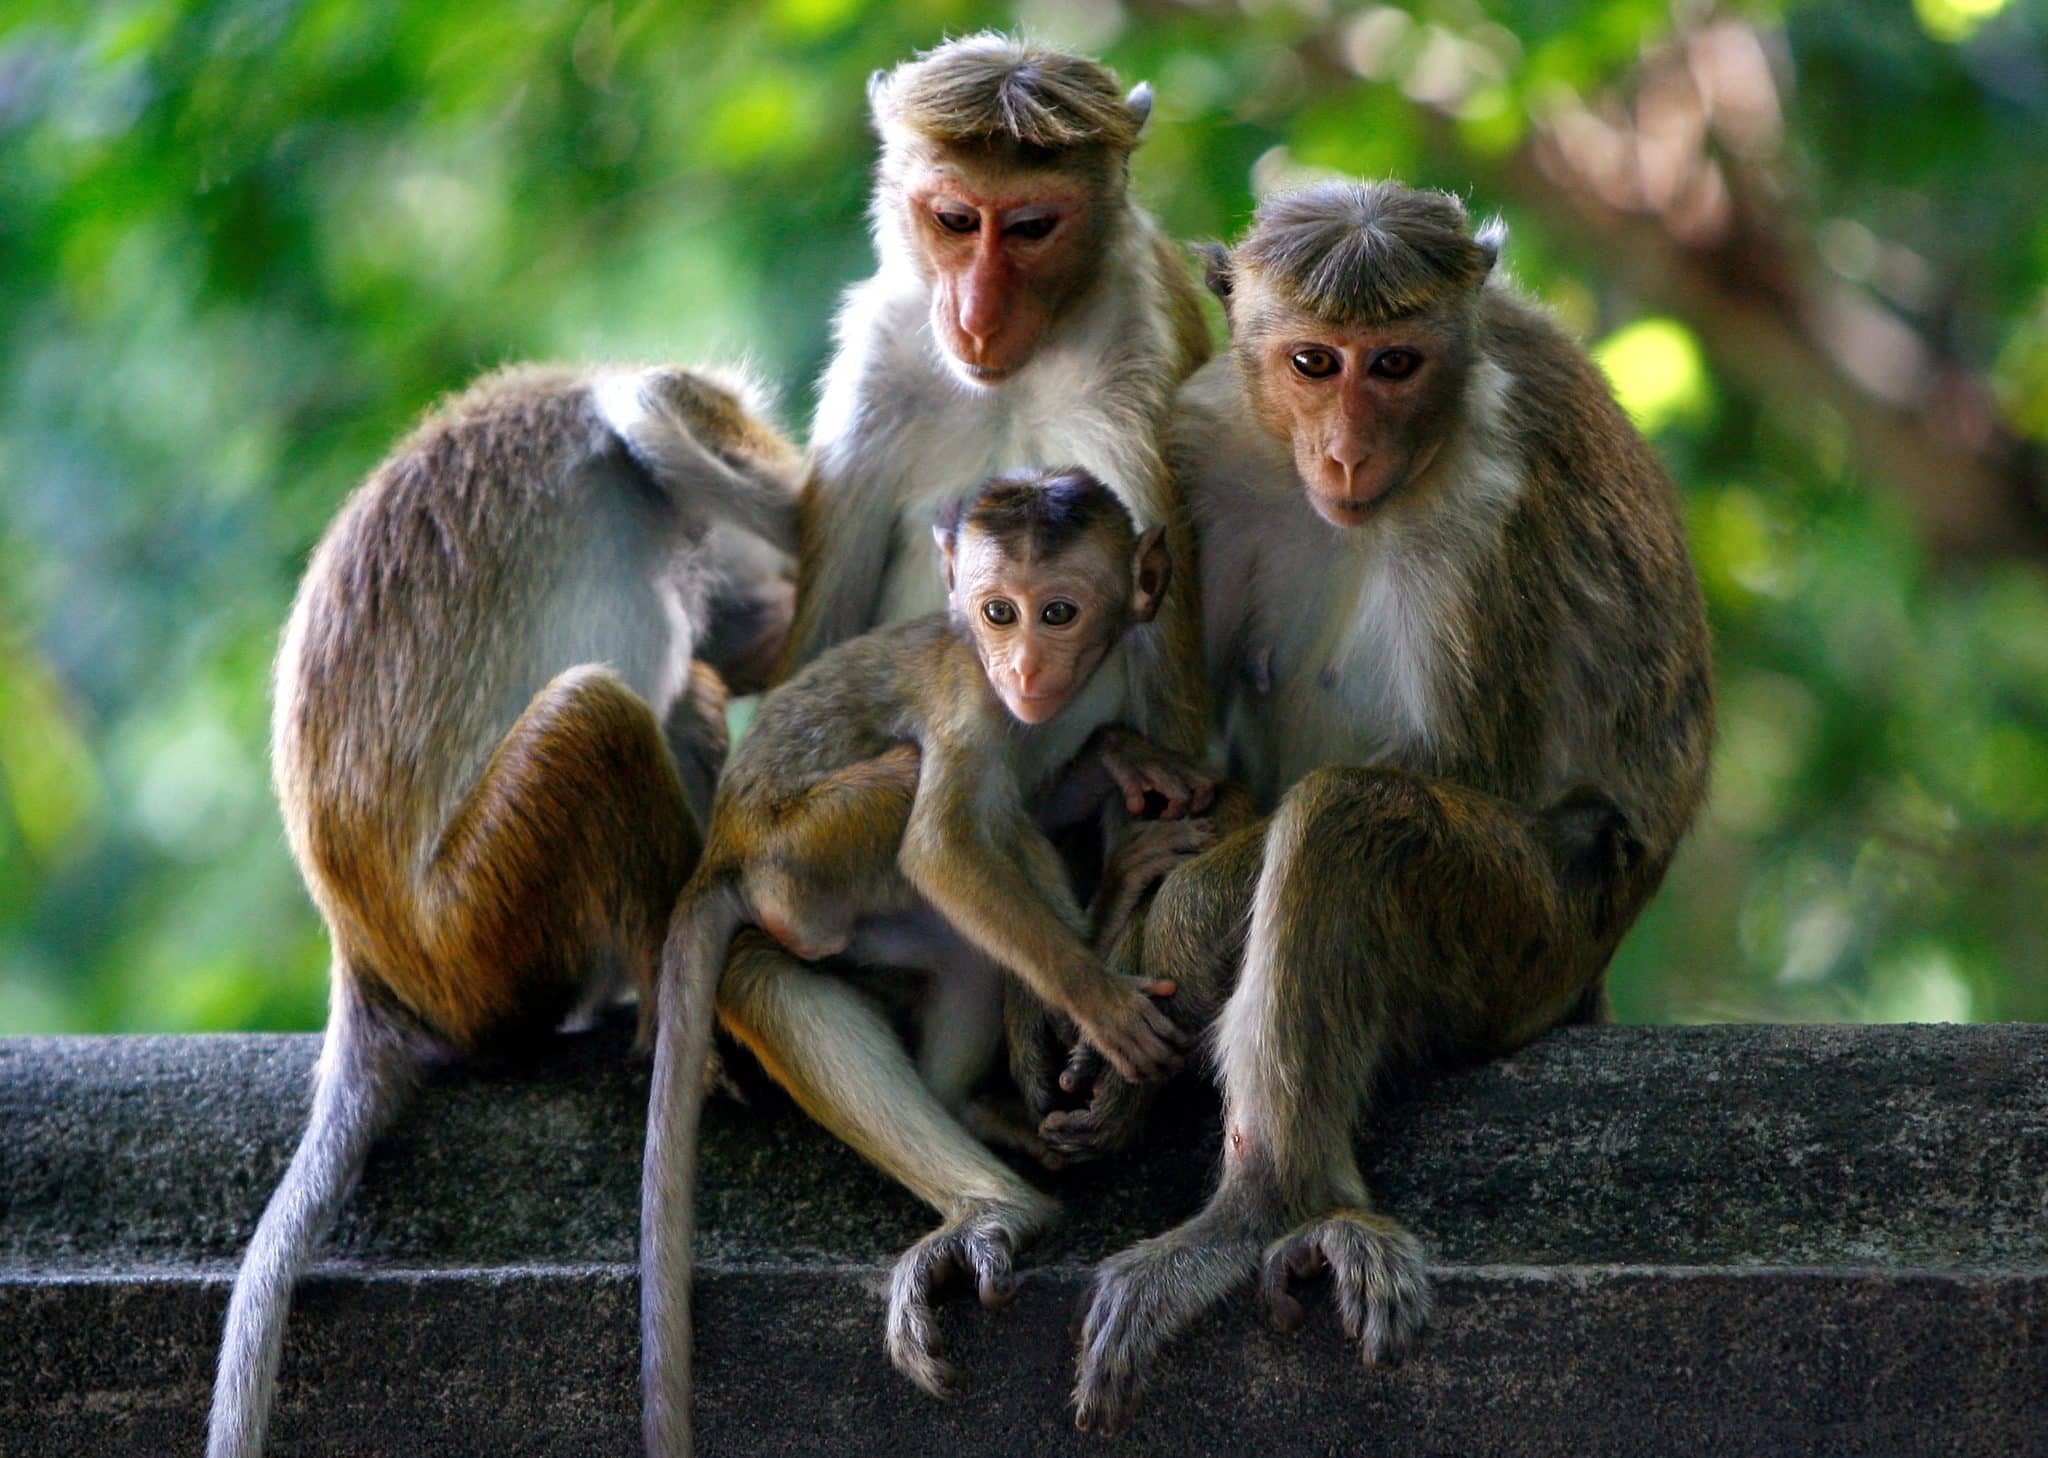 A group of monkeys sitting on a ledge